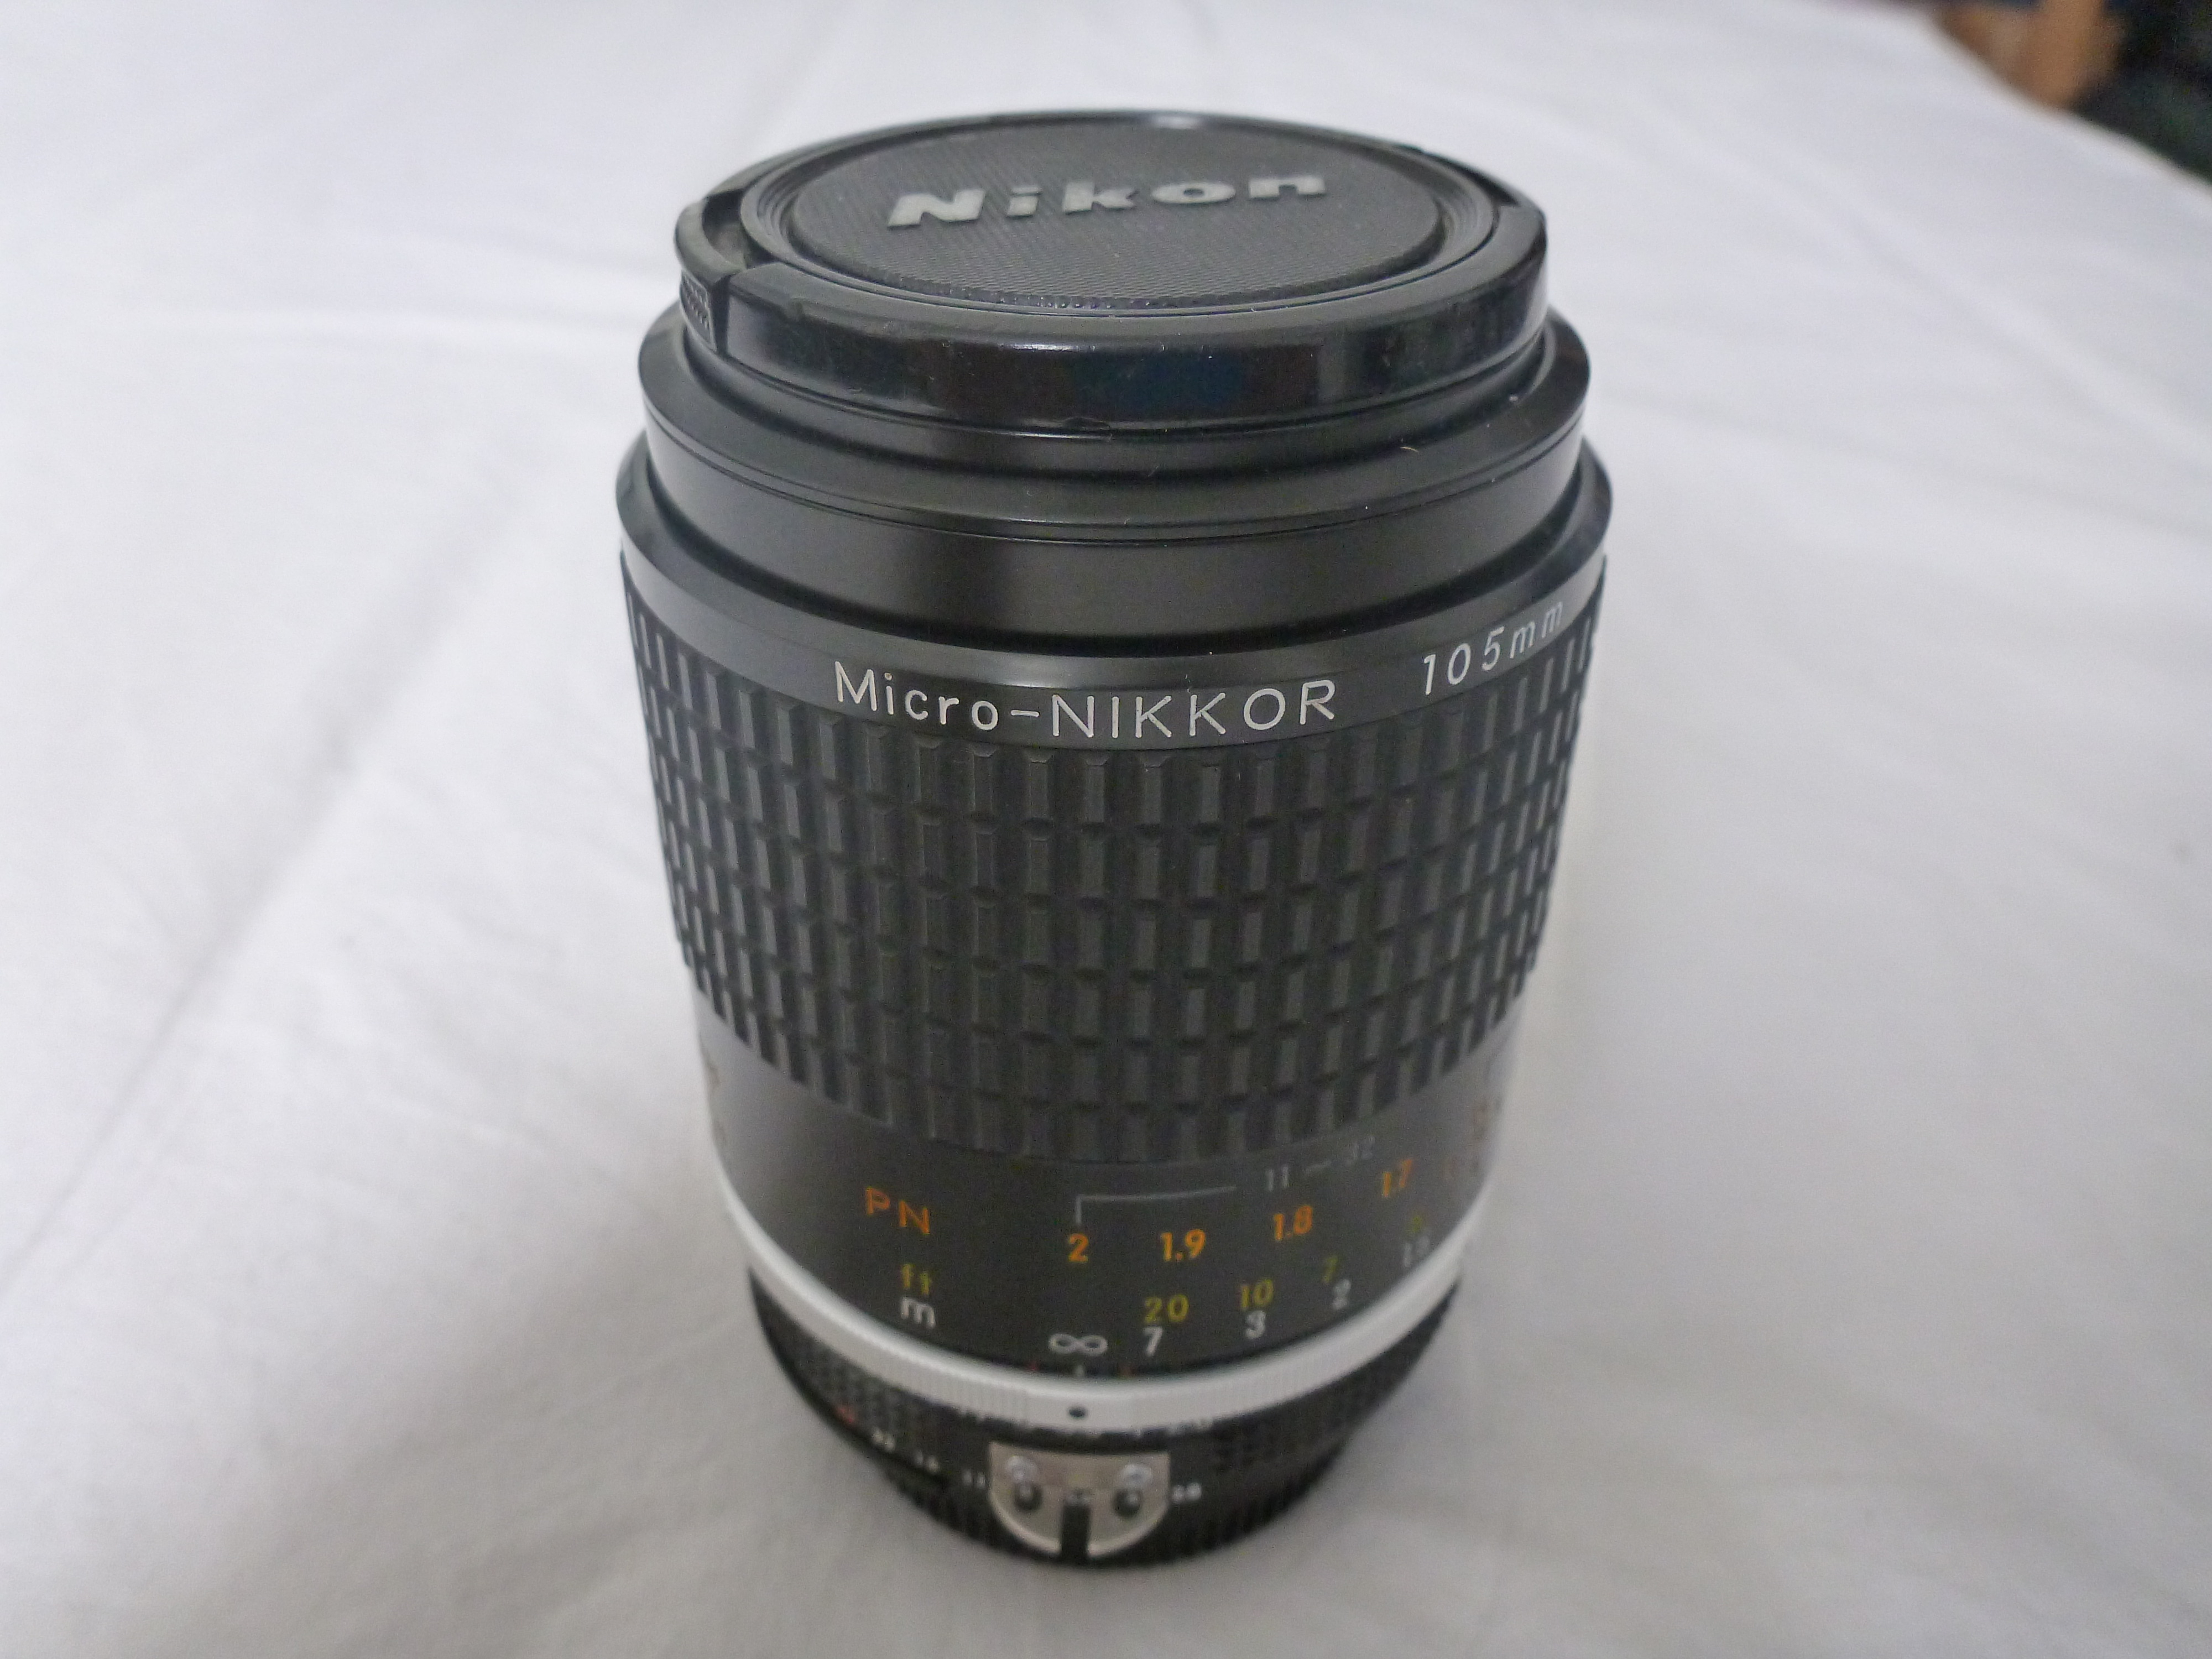 Nikon Micro-Nikkor 105mm f/2.8 AI-s